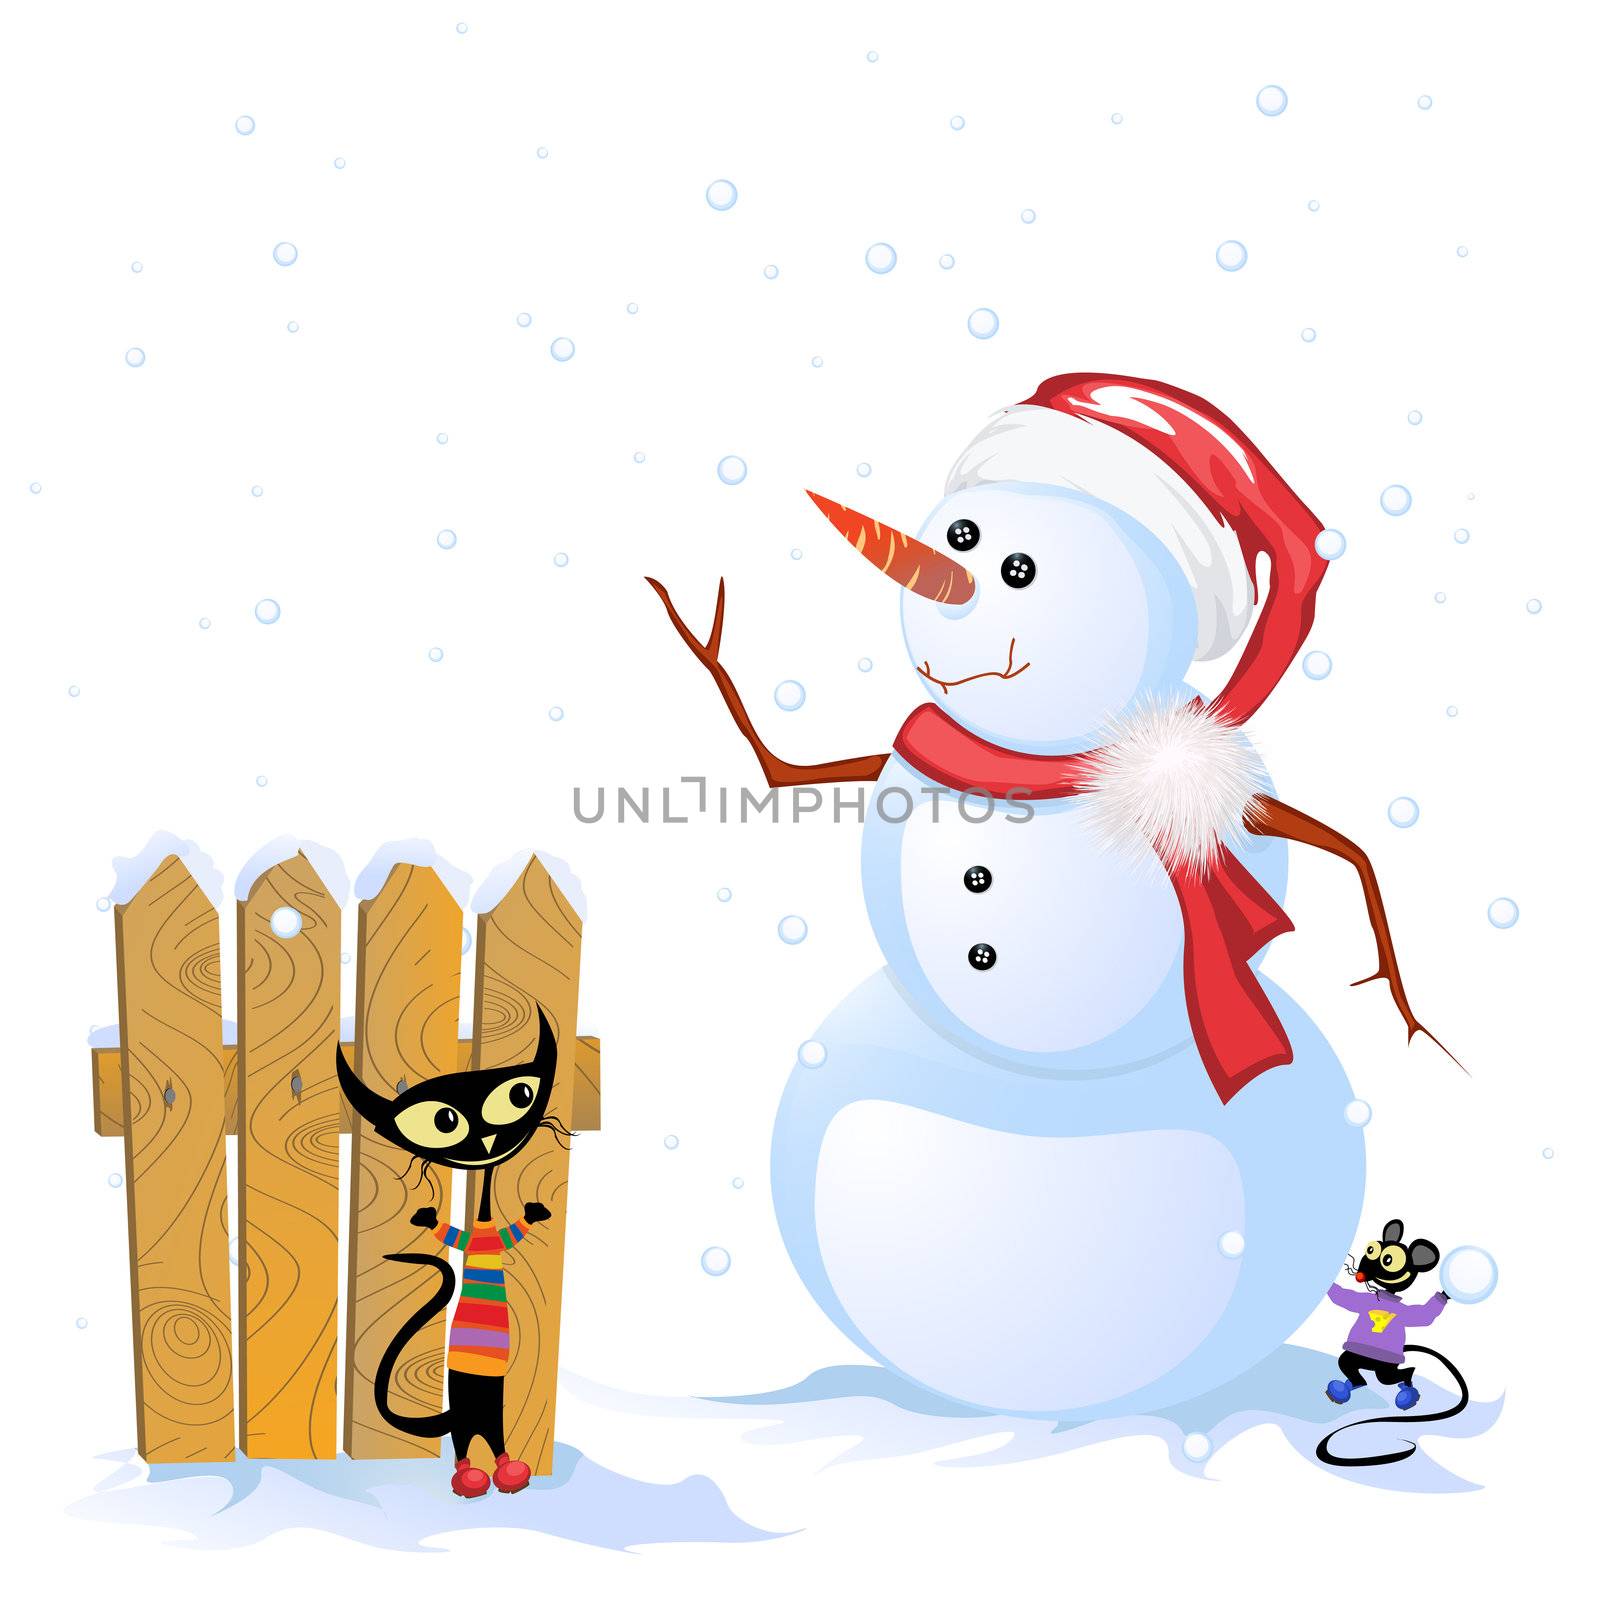 Winter Holidays celebration card, graphic illustration